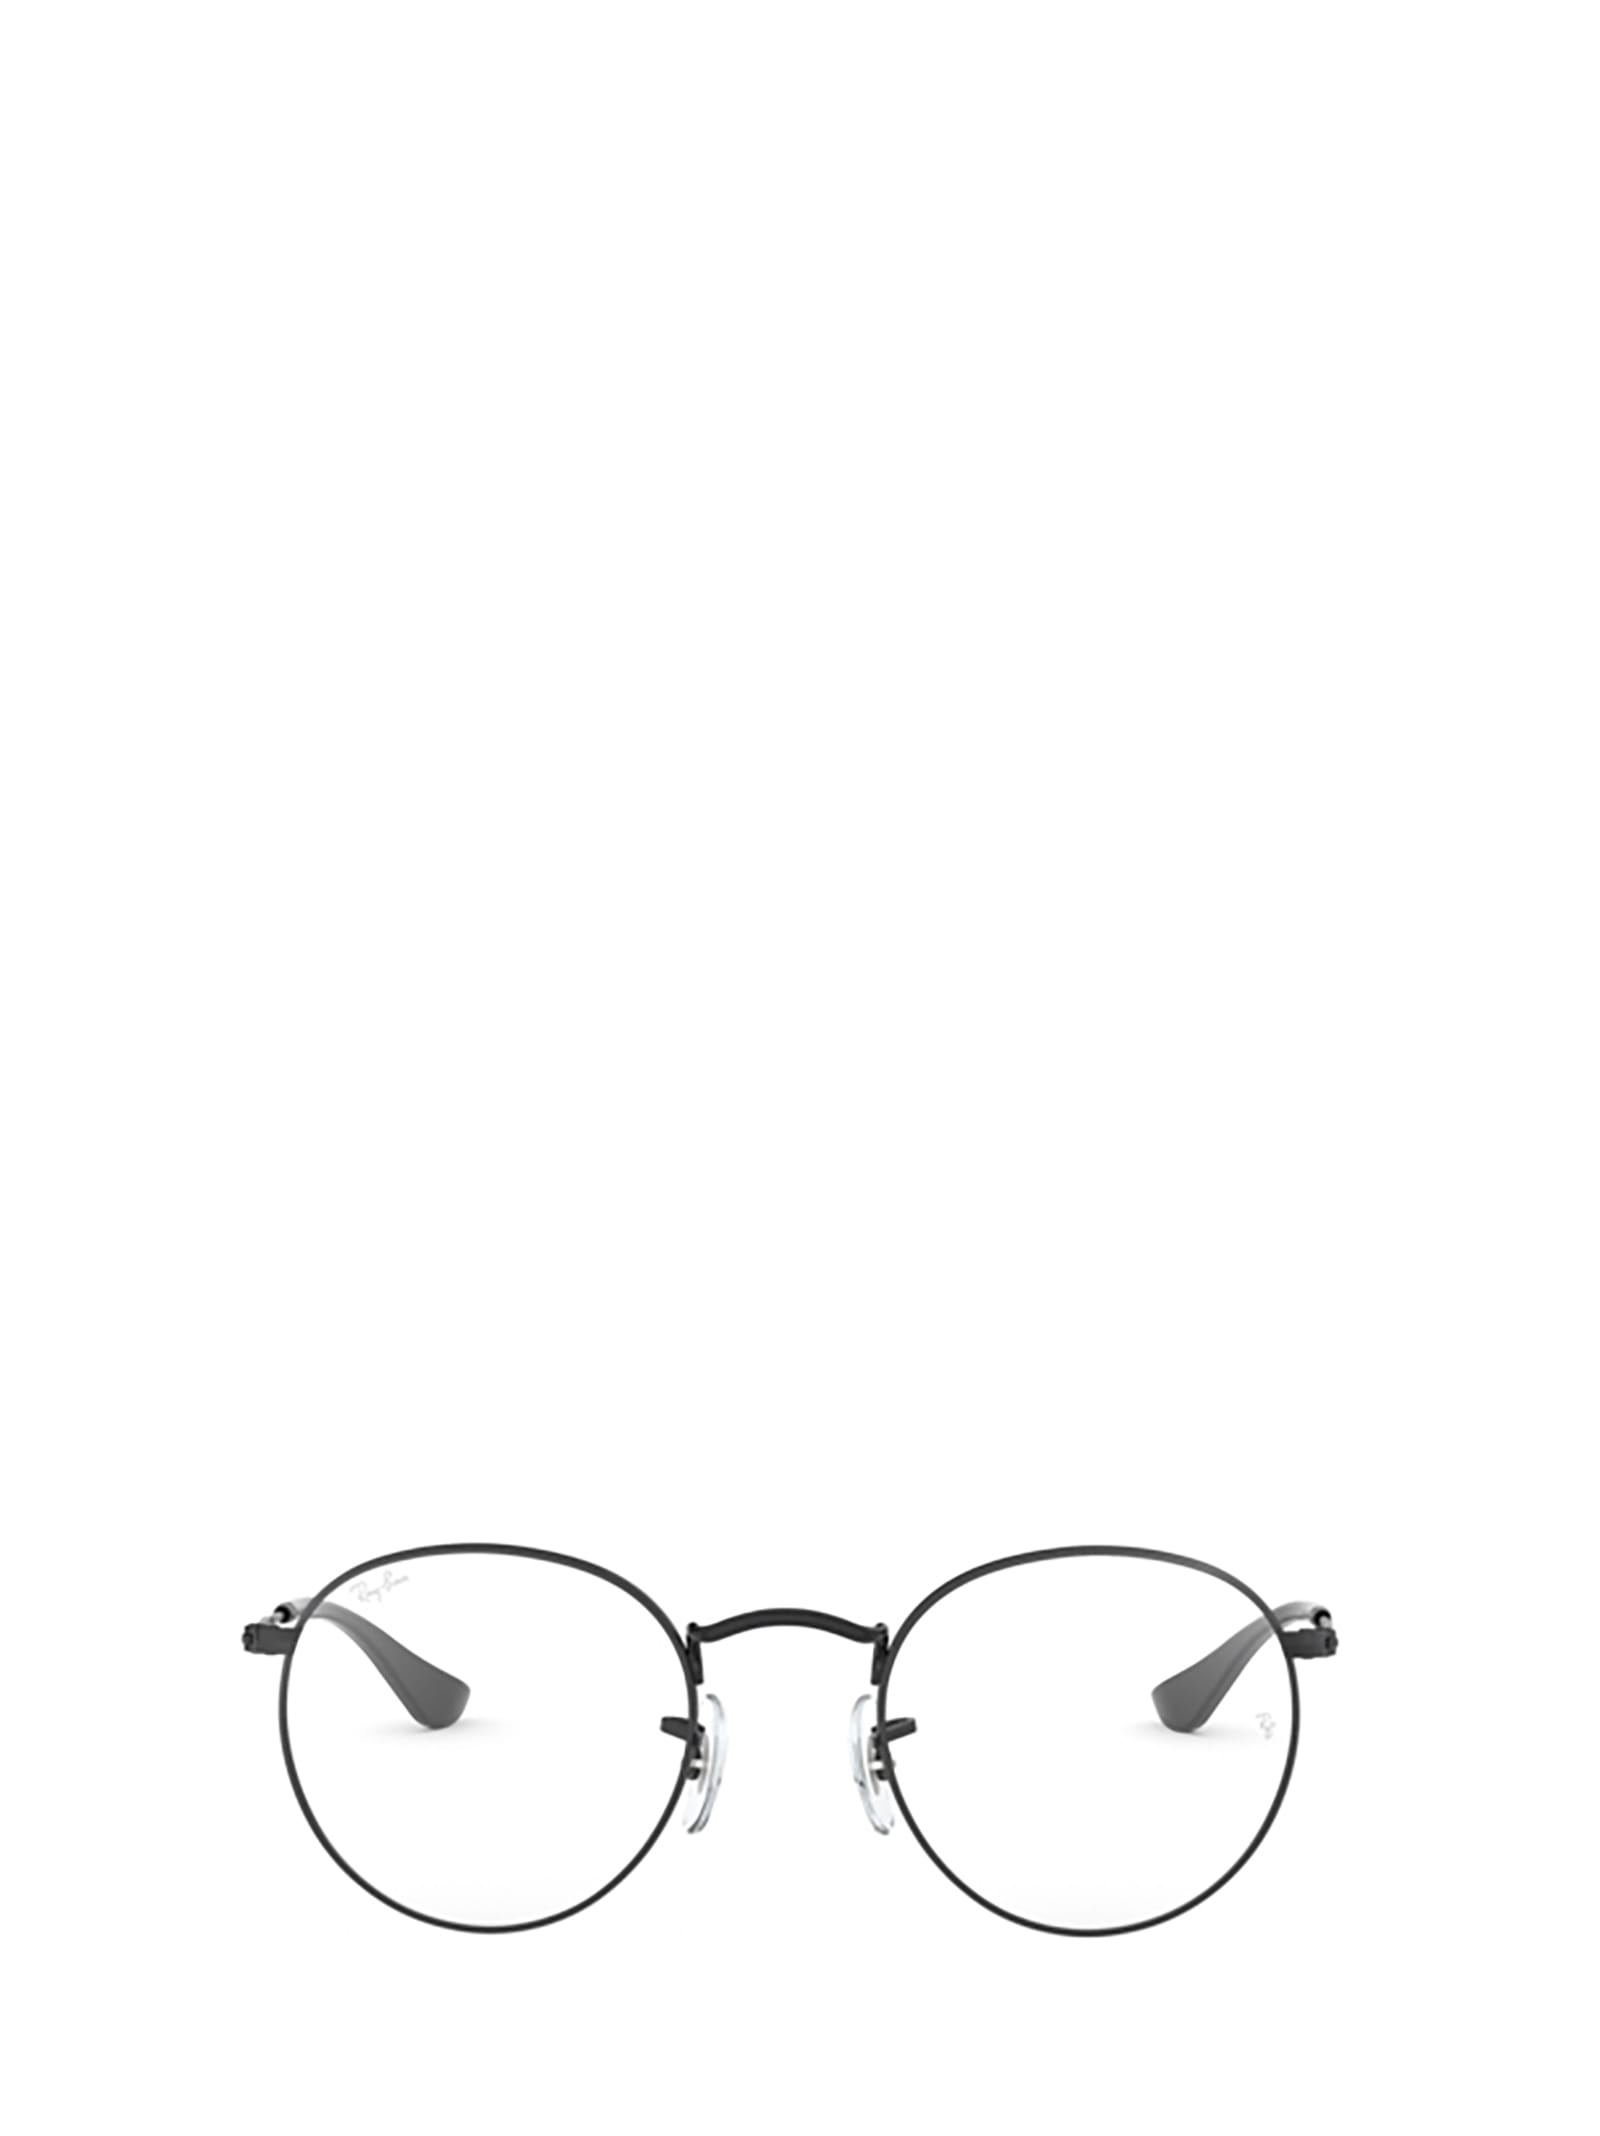 Ray Ban Rx3447v Matte Black Glasses